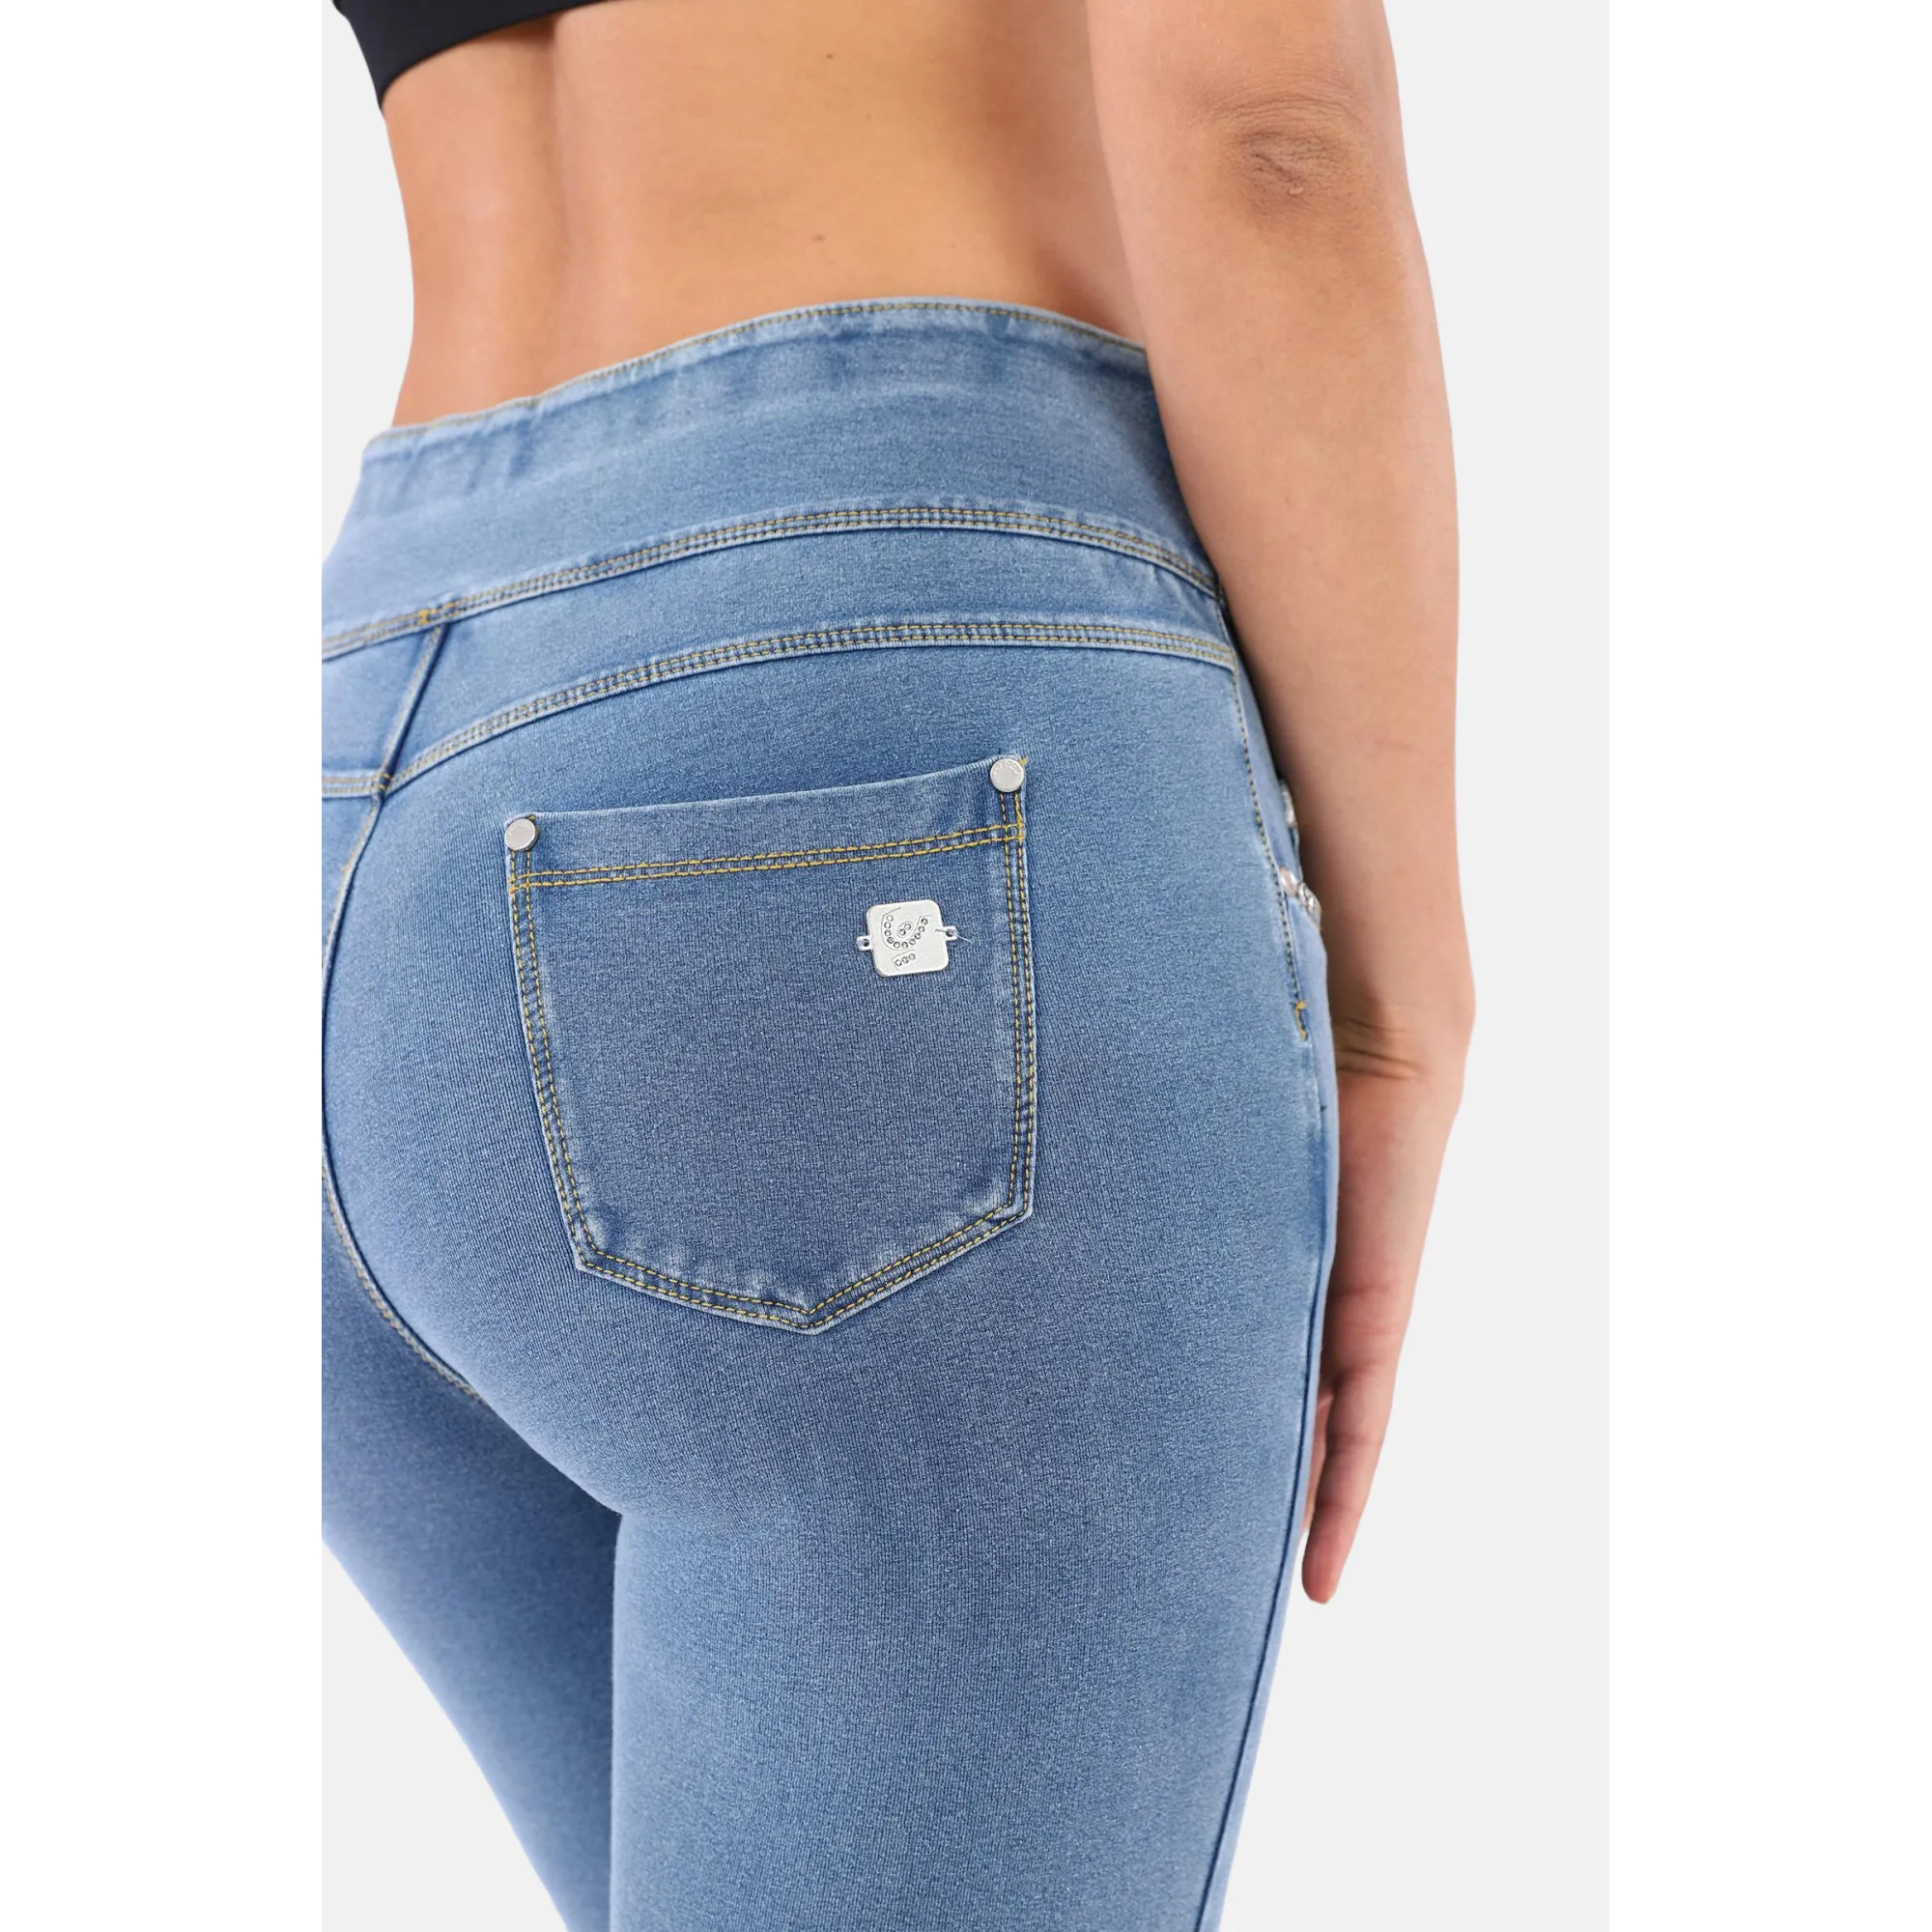 Freddy N.O.W.® Yoga Damen Comfort Jeans - Mid Waist Skinny - Hellblau - Gelbe Nähte